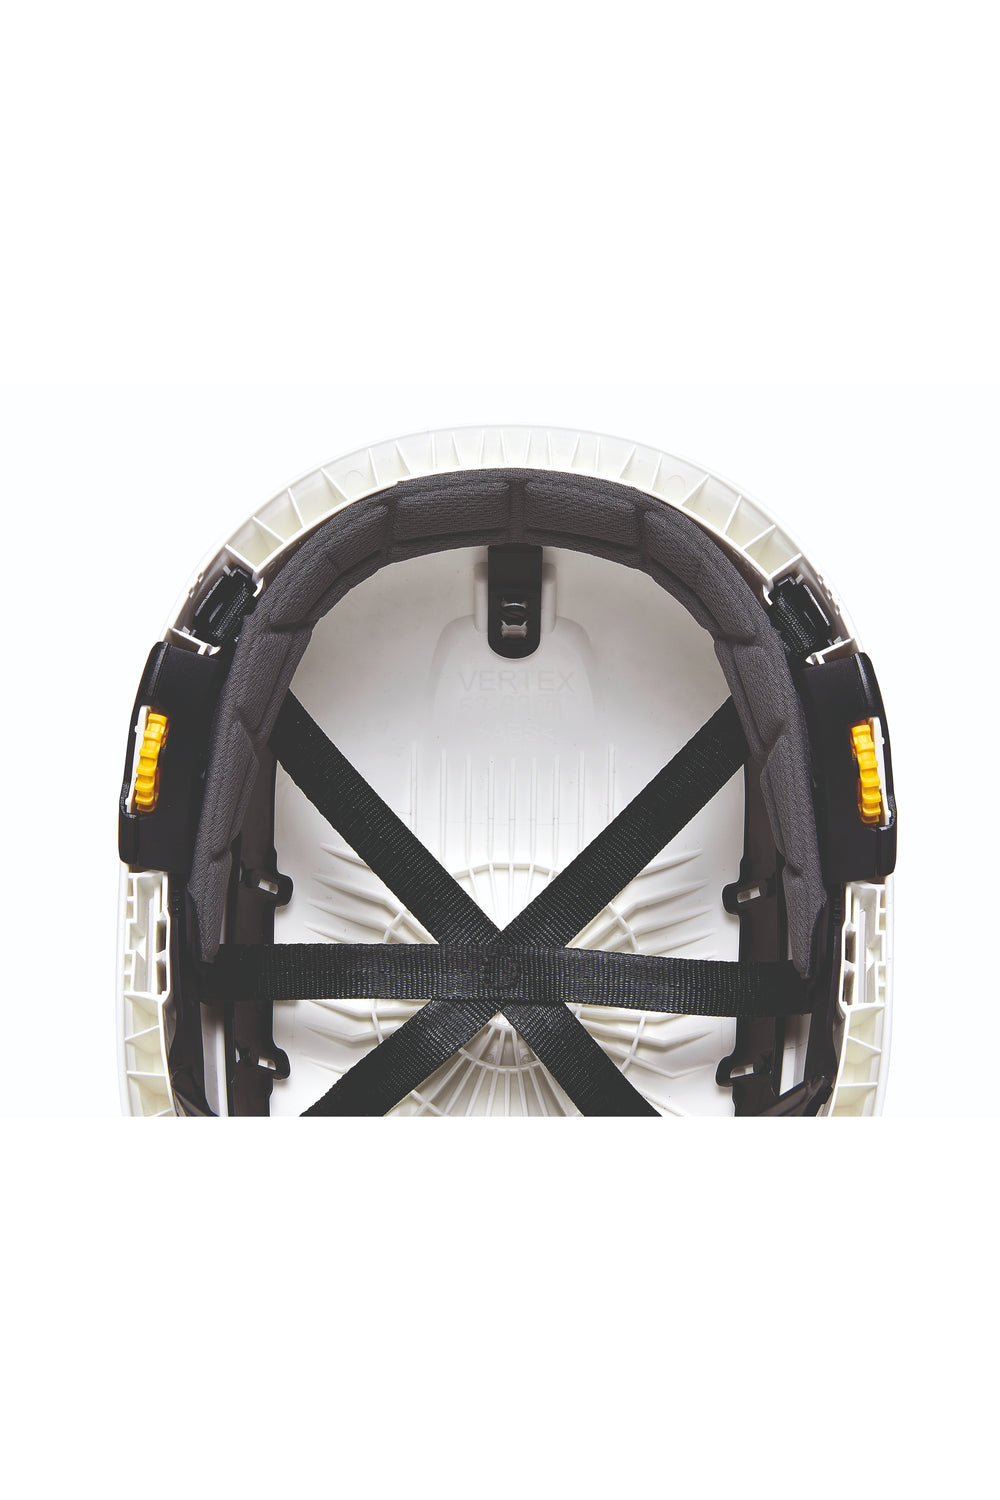 Petzl - Comfort Foam for Vertex and Strato Helmets